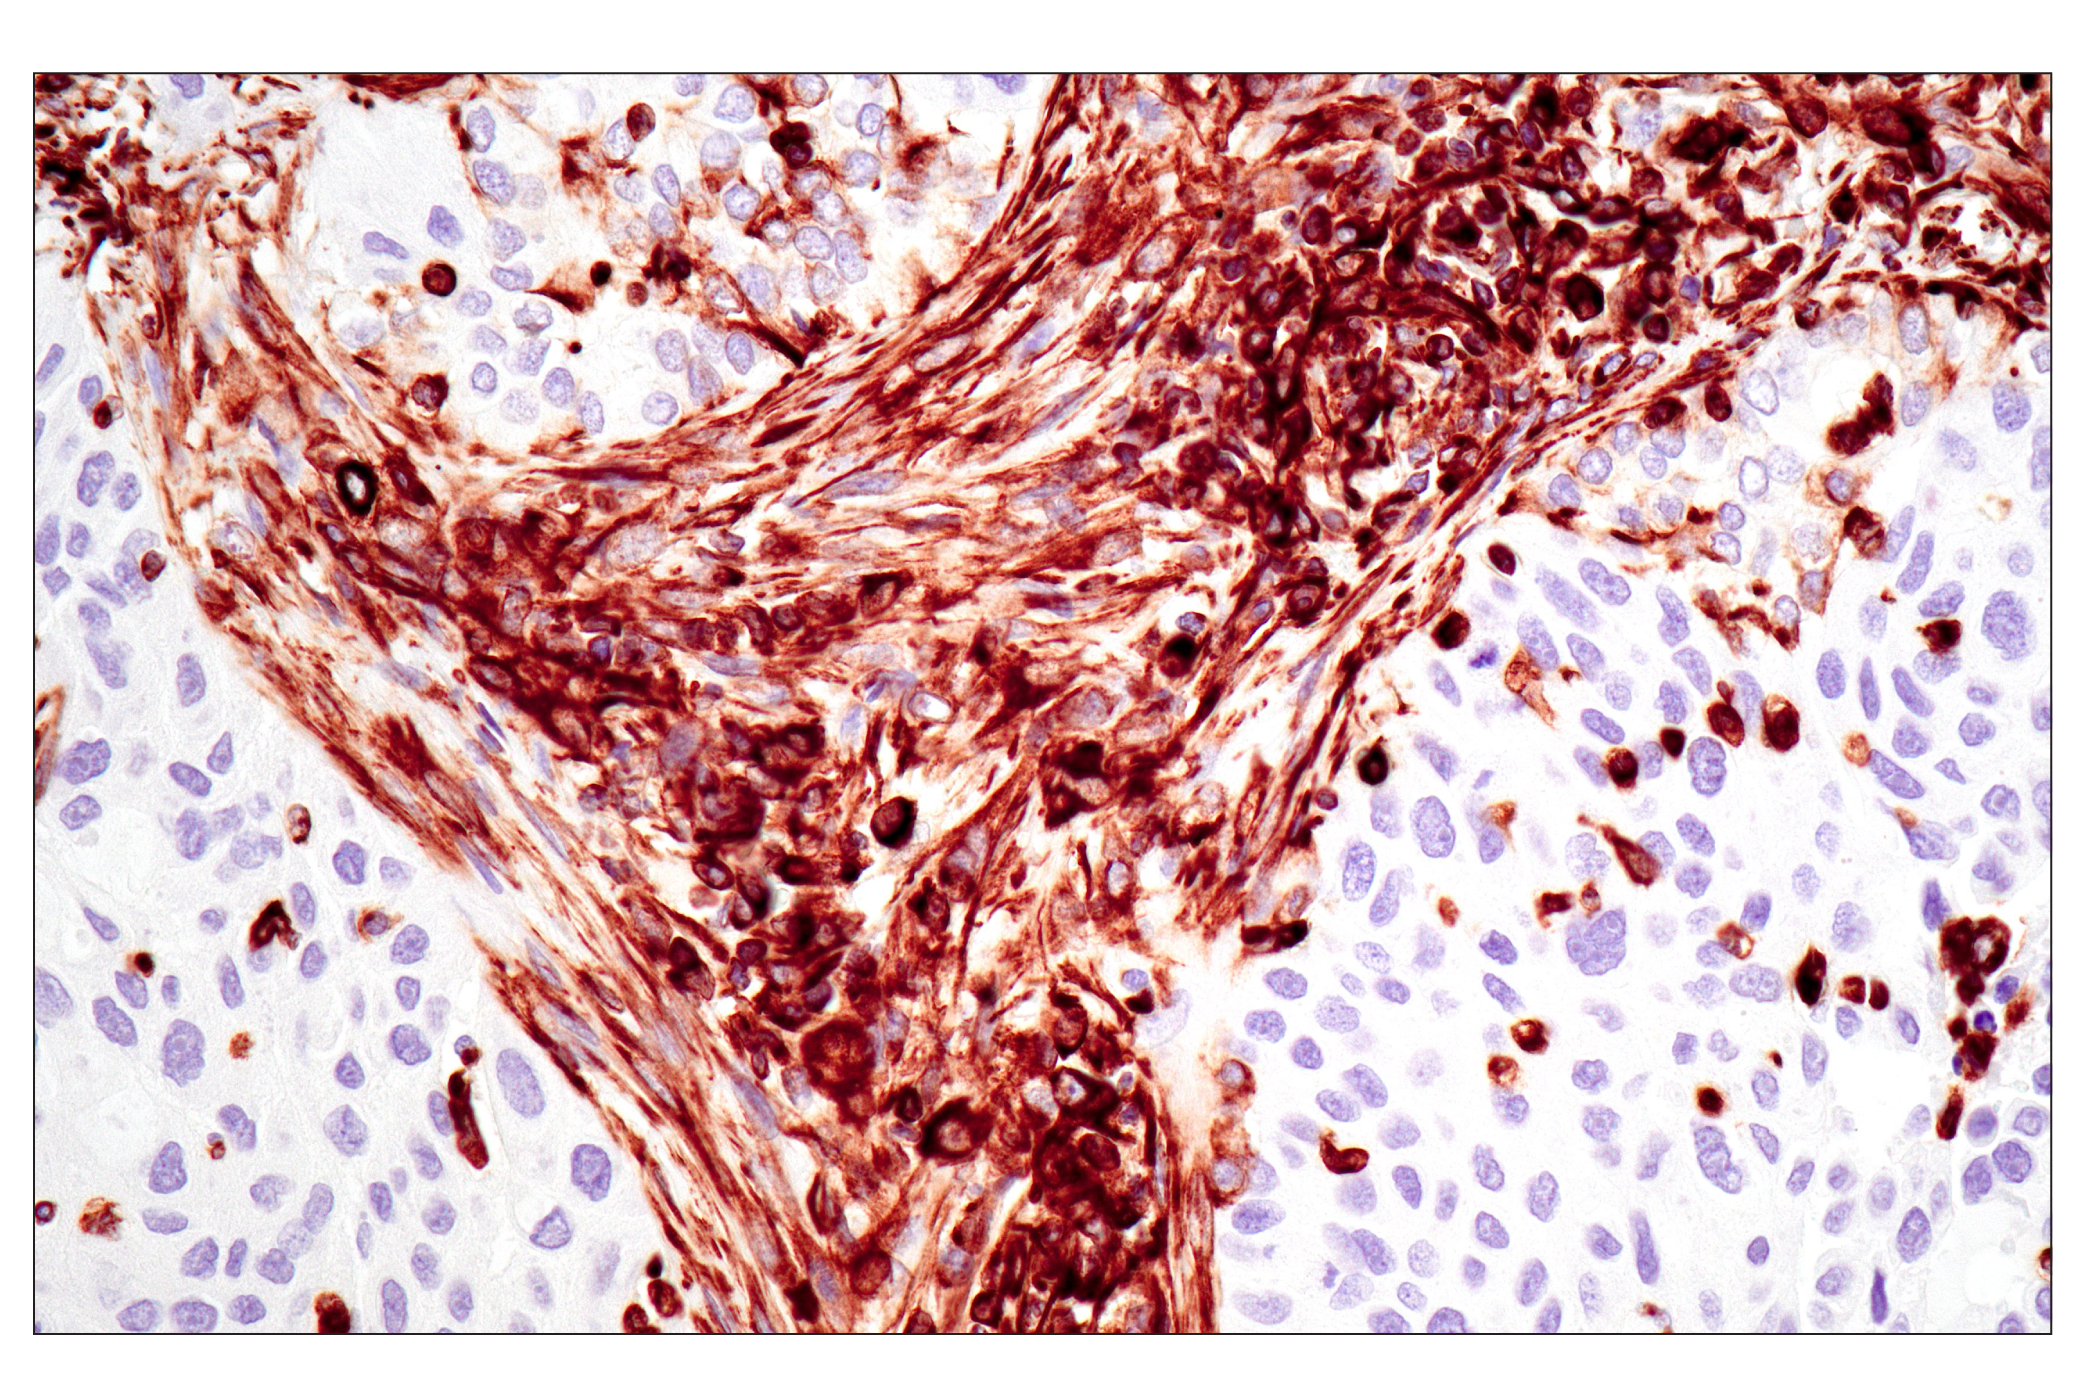  Image 29: Epithelial-Mesenchymal Transition (EMT) IF Antibody Sampler Kit